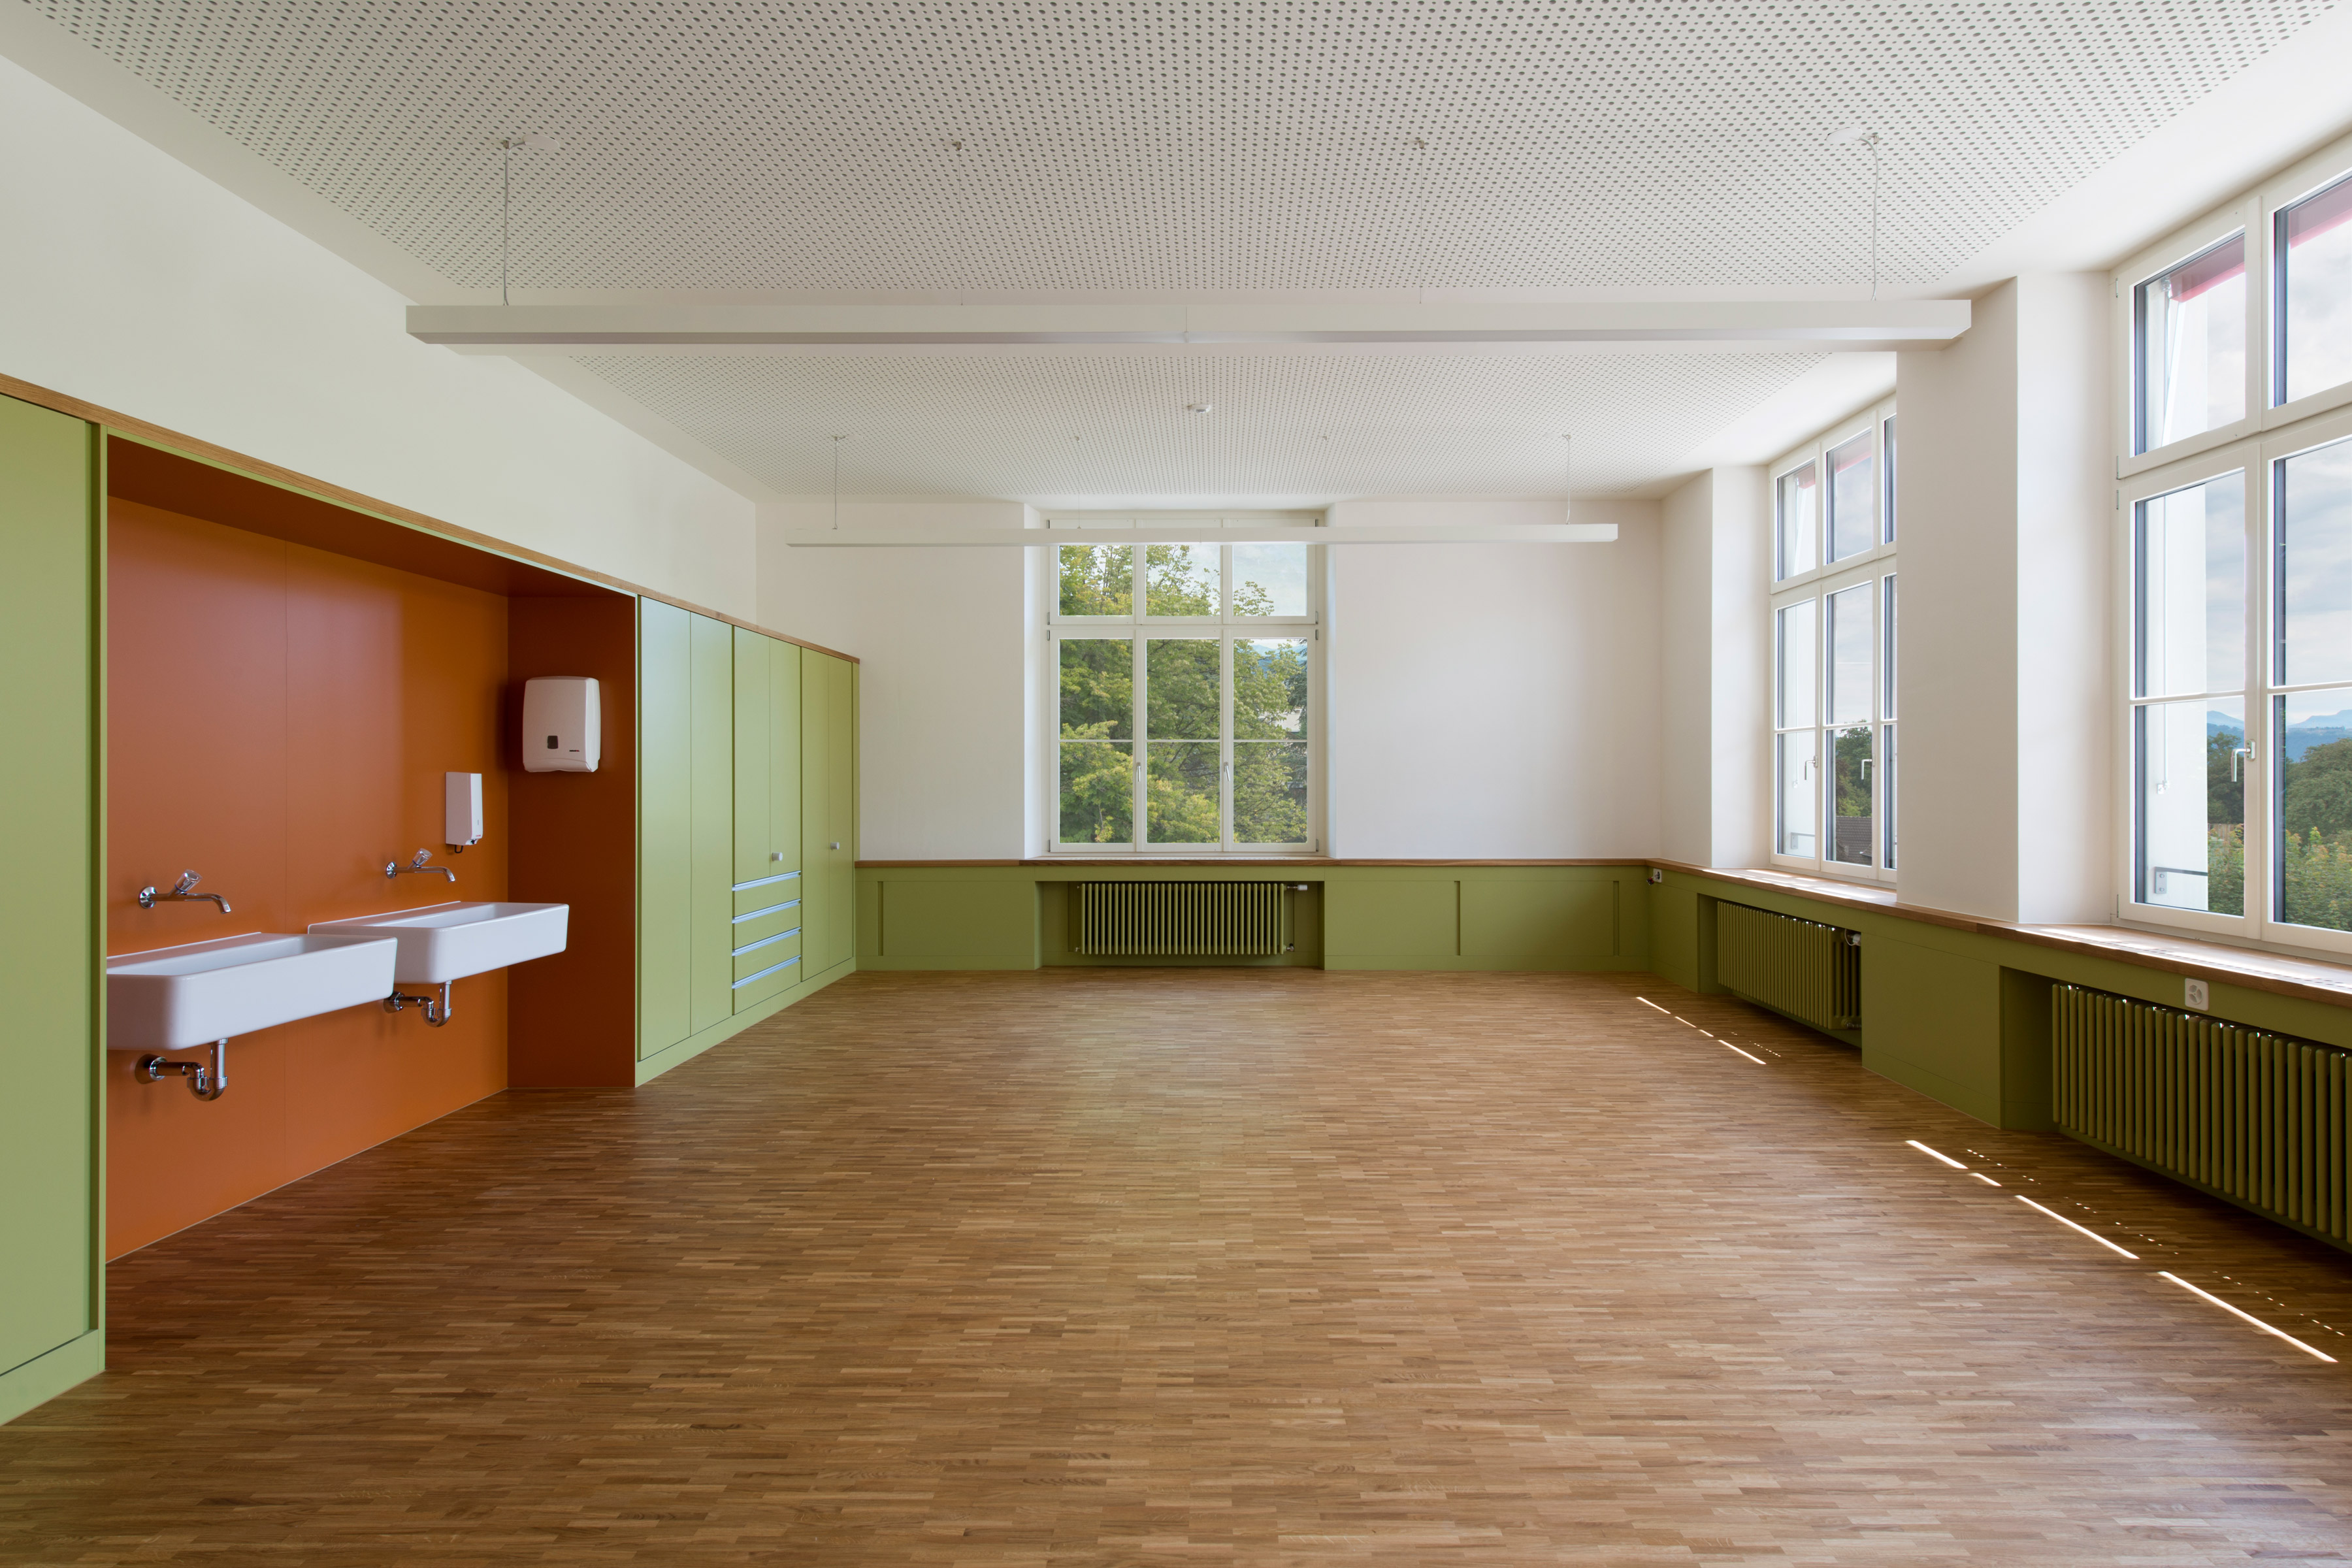 Architecture photo about Kirchbühl school Kriens Luzern